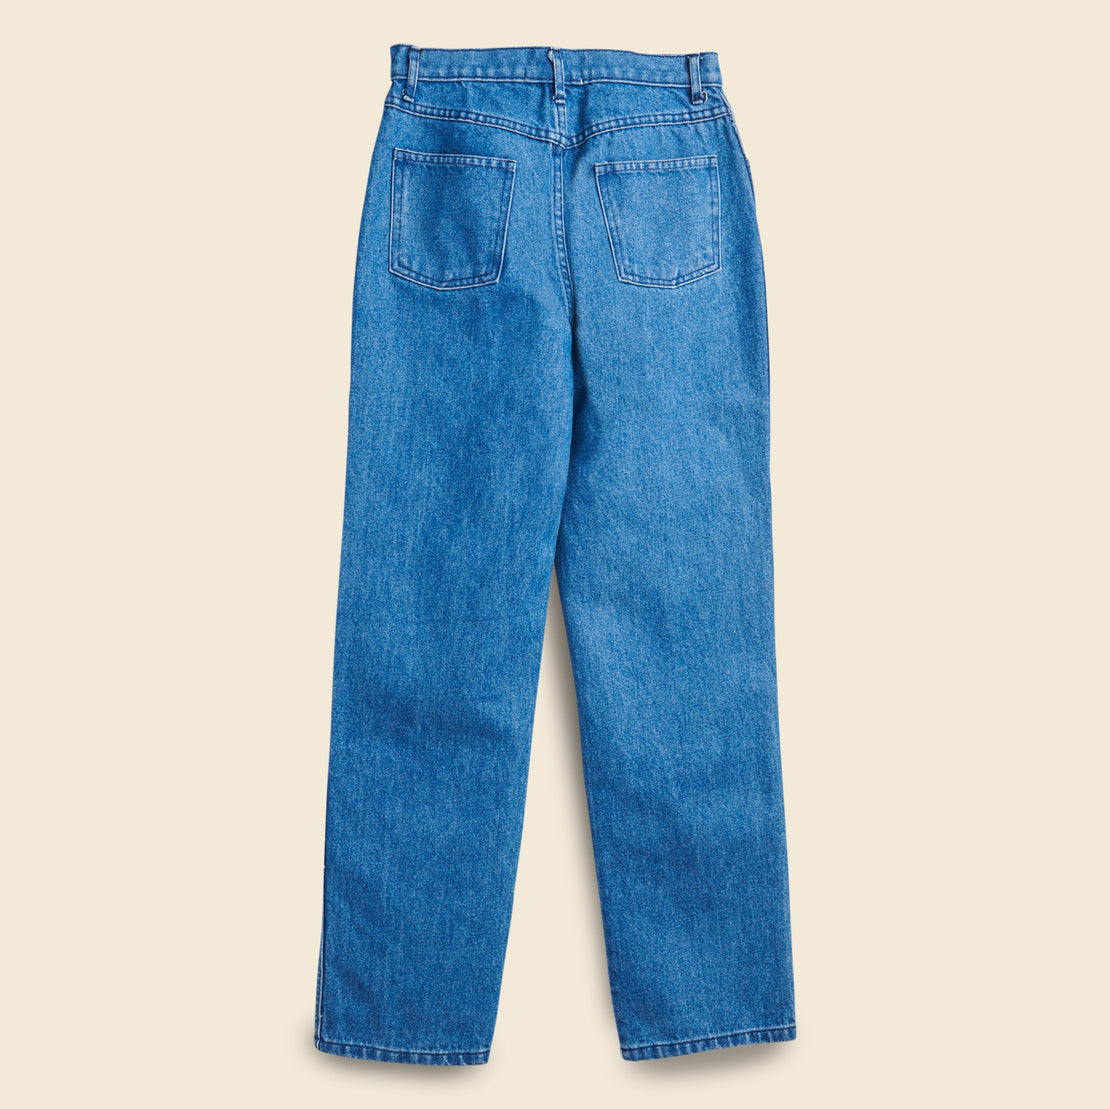 Patchwork Jeans - Dark Blue - Carleen - STAG Provisions - W - Pants - Denim